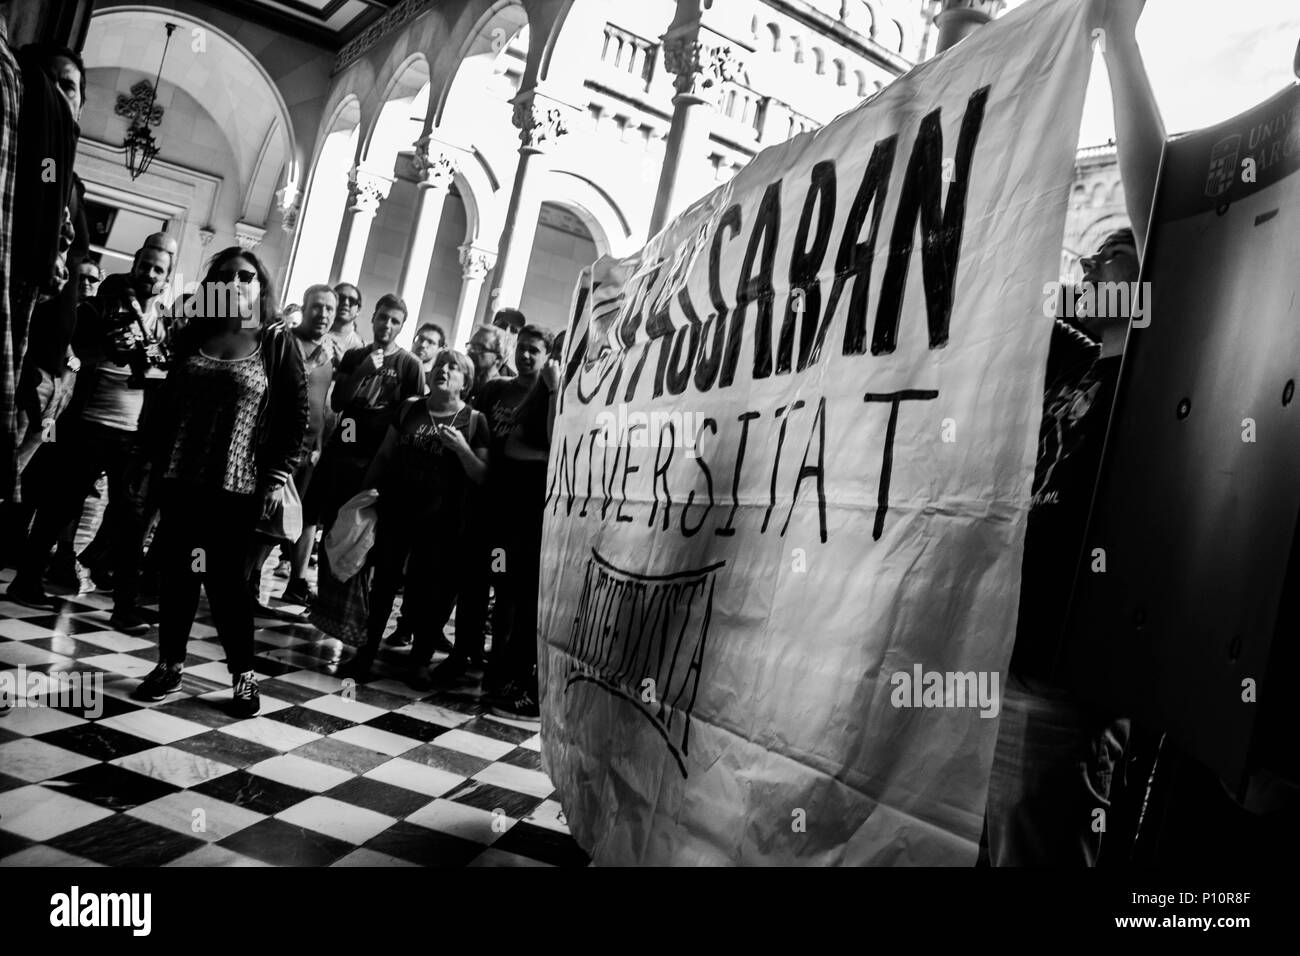 antifascist demonstration in the university Stock Photo